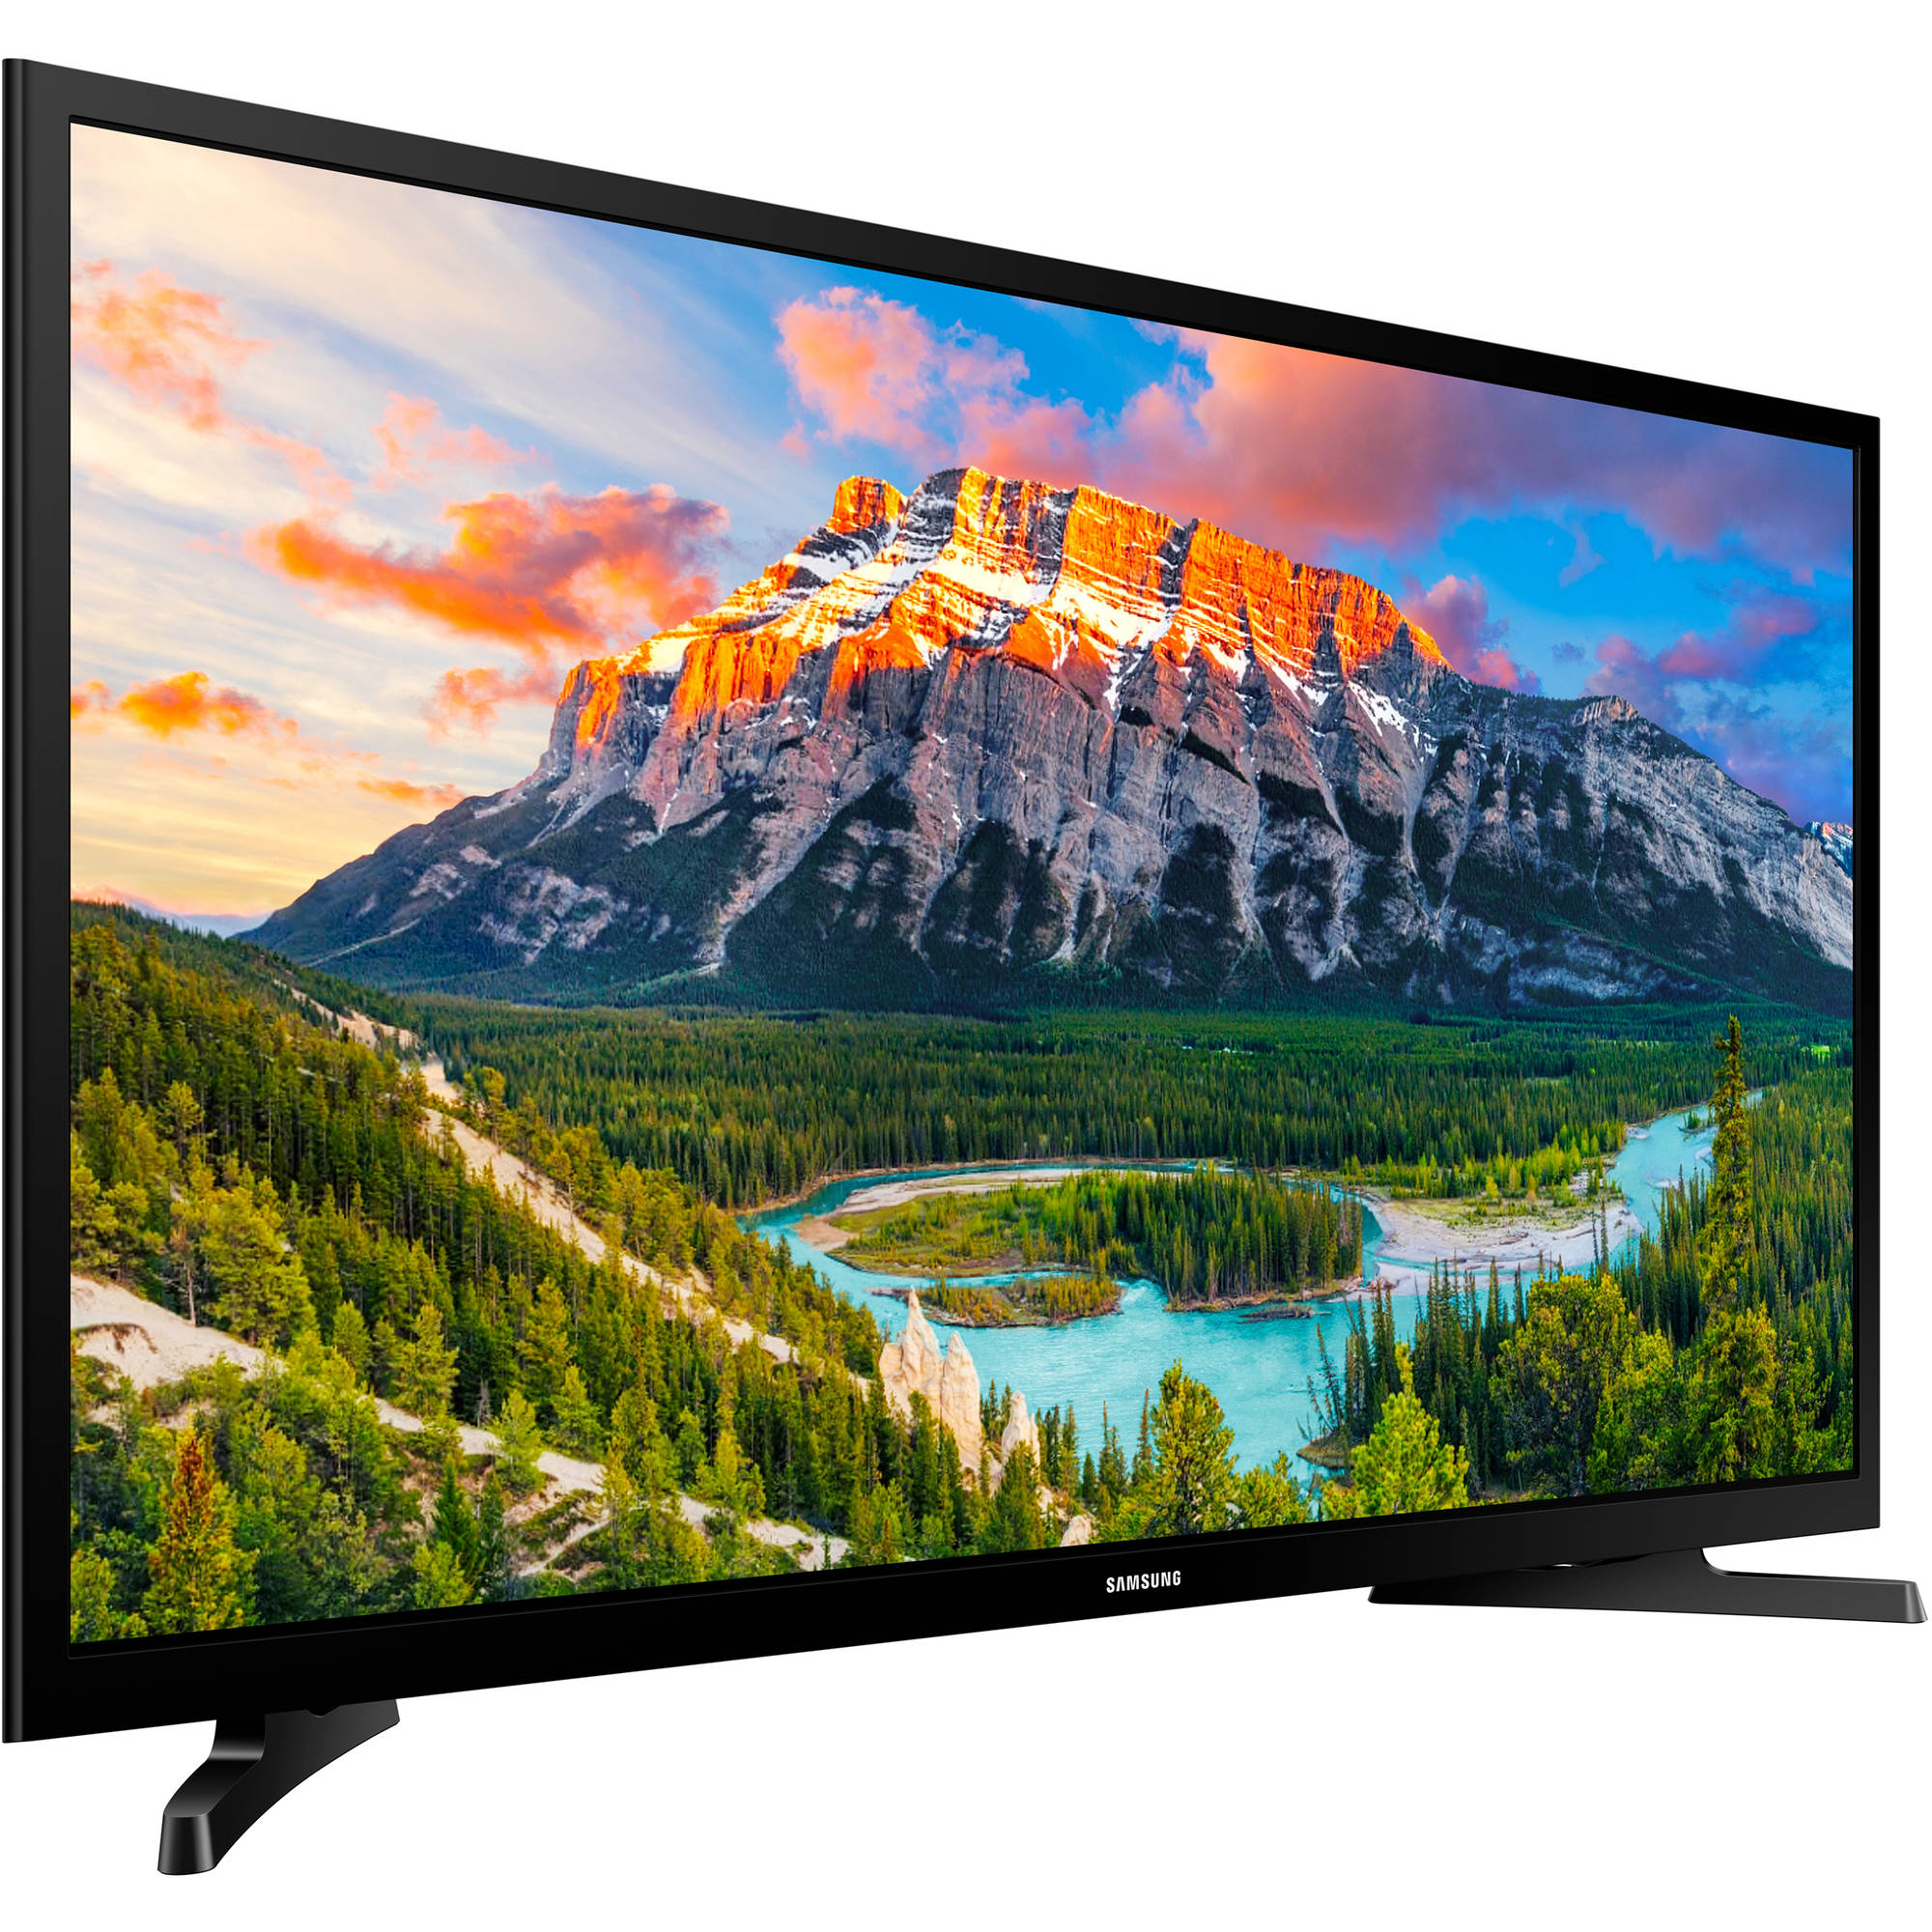 Samsung N5300 32 "Clase HDR Full HD Smart LED TV